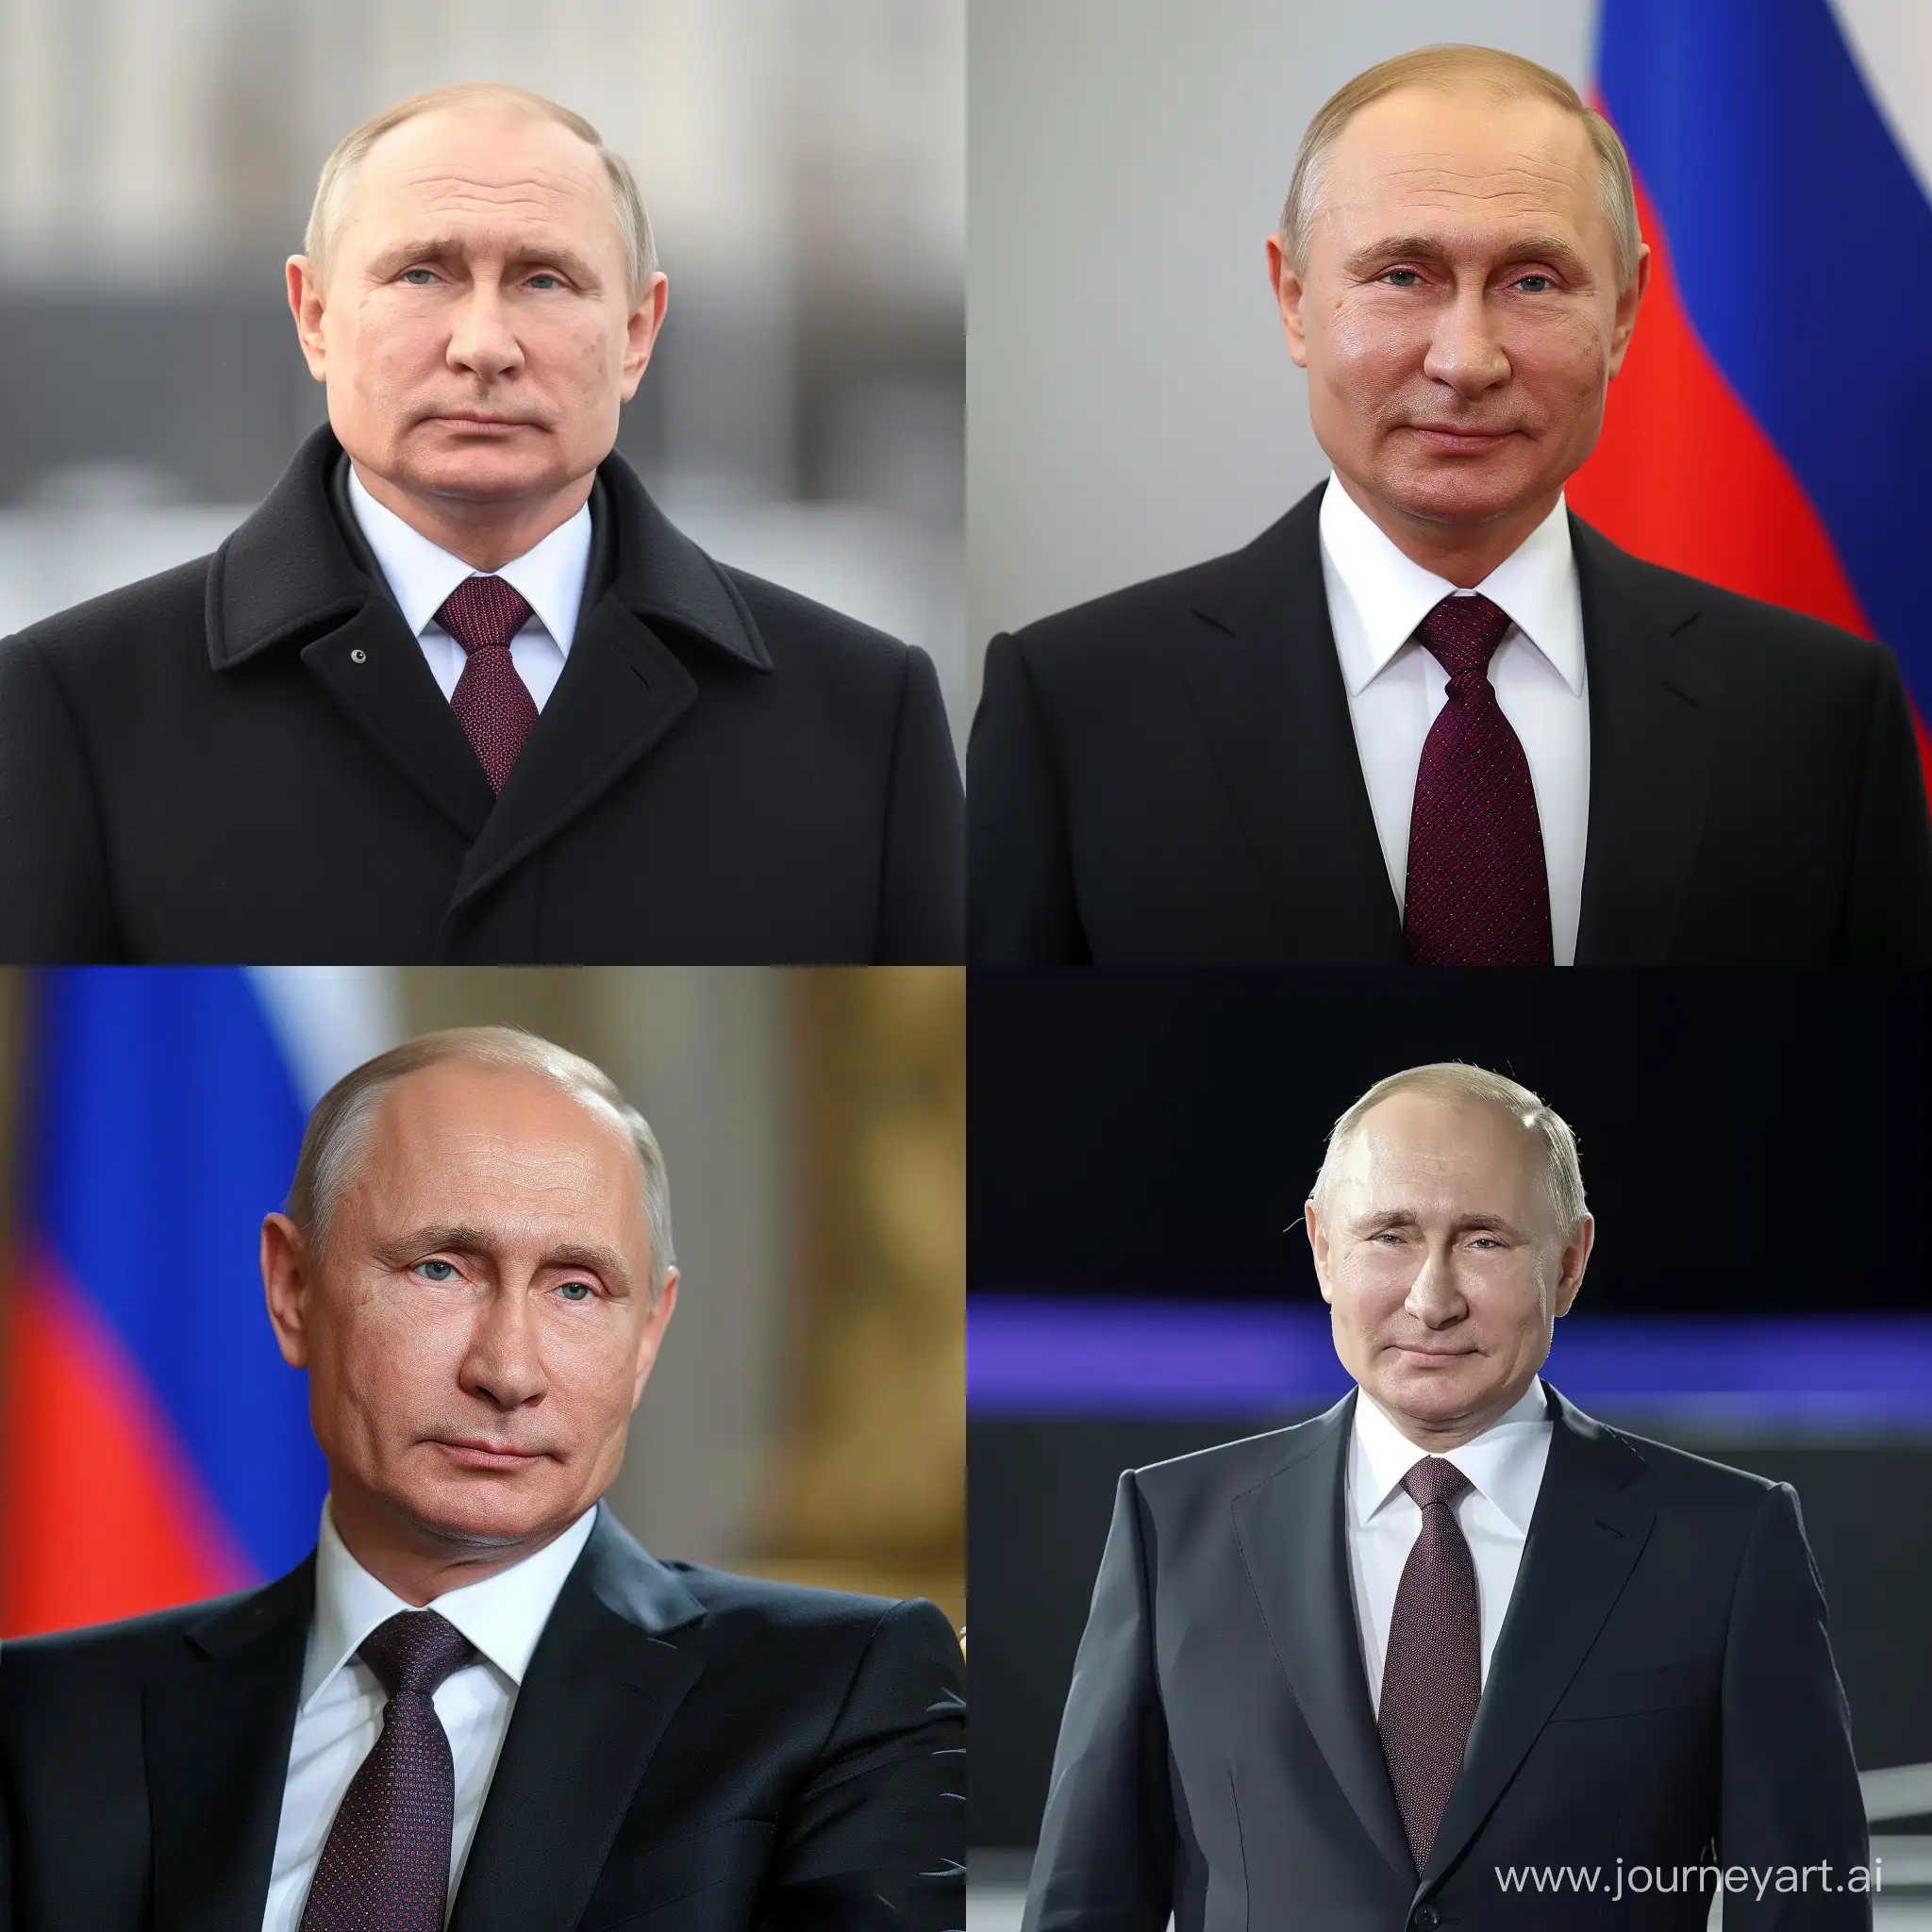 Global-Leader-Vladimir-Putin-in-Majestic-Portrait